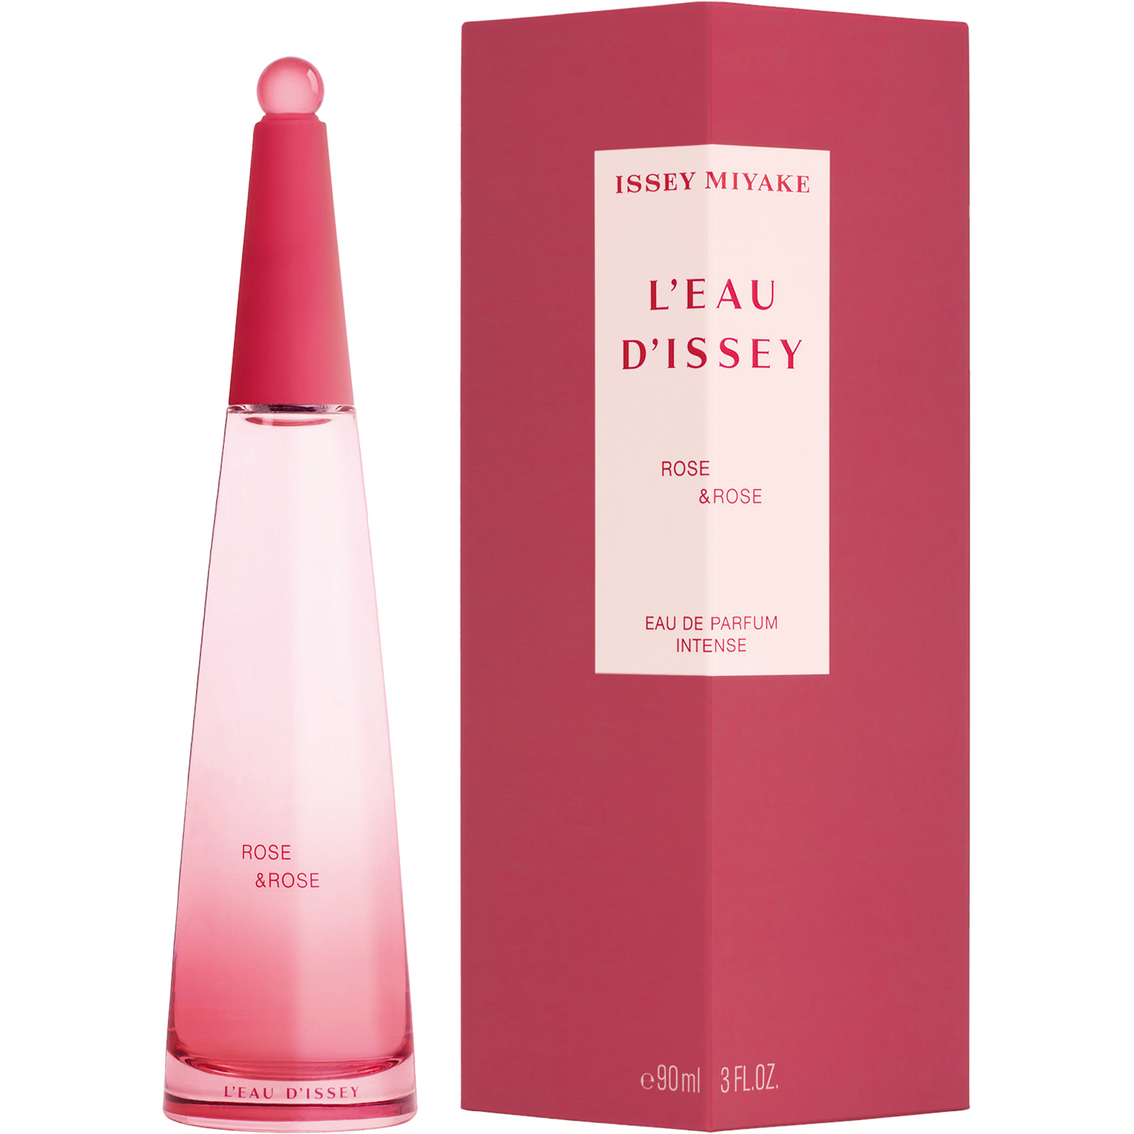 Issey Miyake L'Eau d'Issey Rose and Rose Eau de Parfum Intense - Image 2 of 2